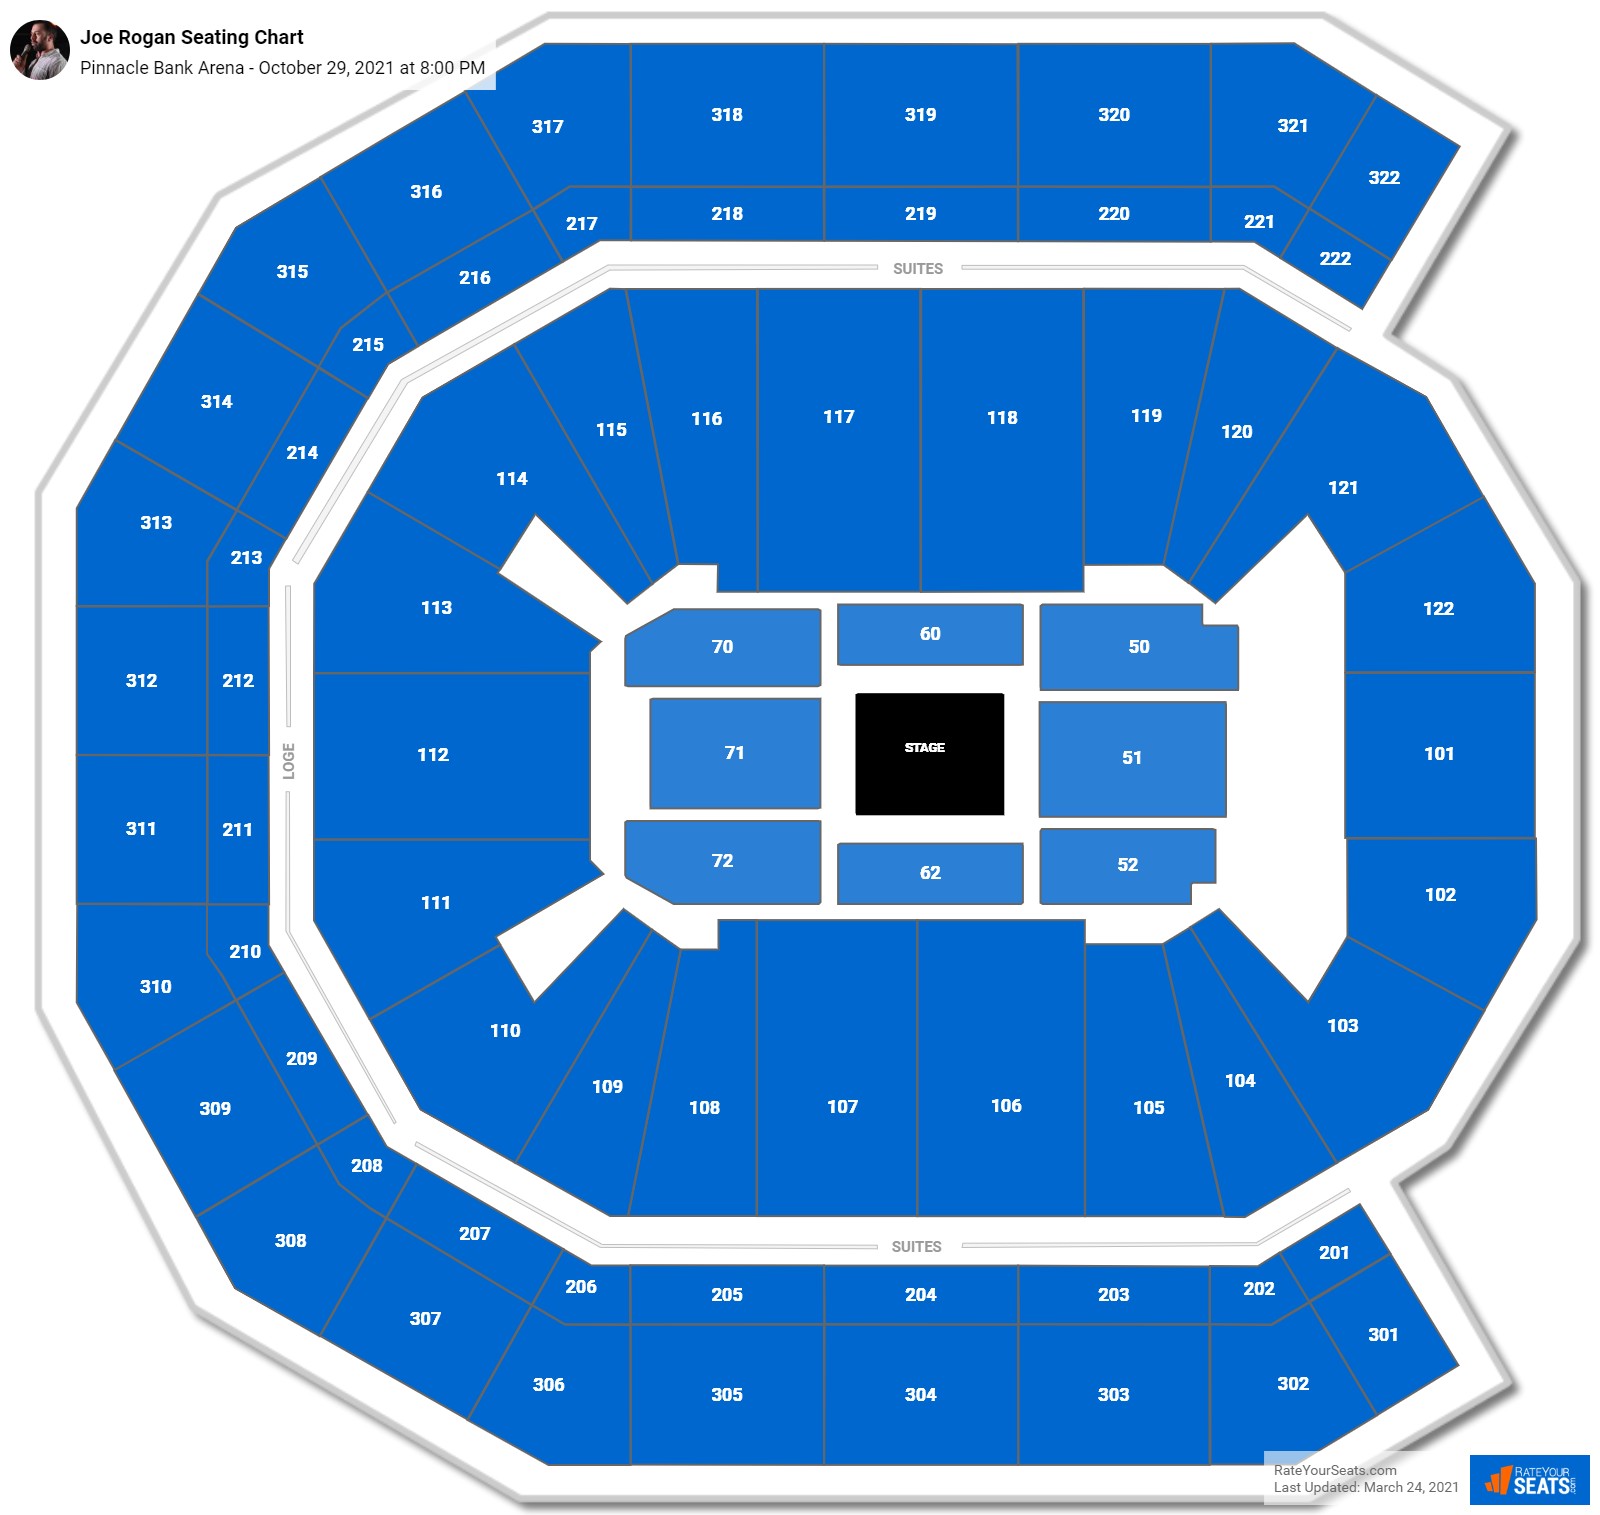 Pinnacle Bank Arena Seating Charts for Concerts